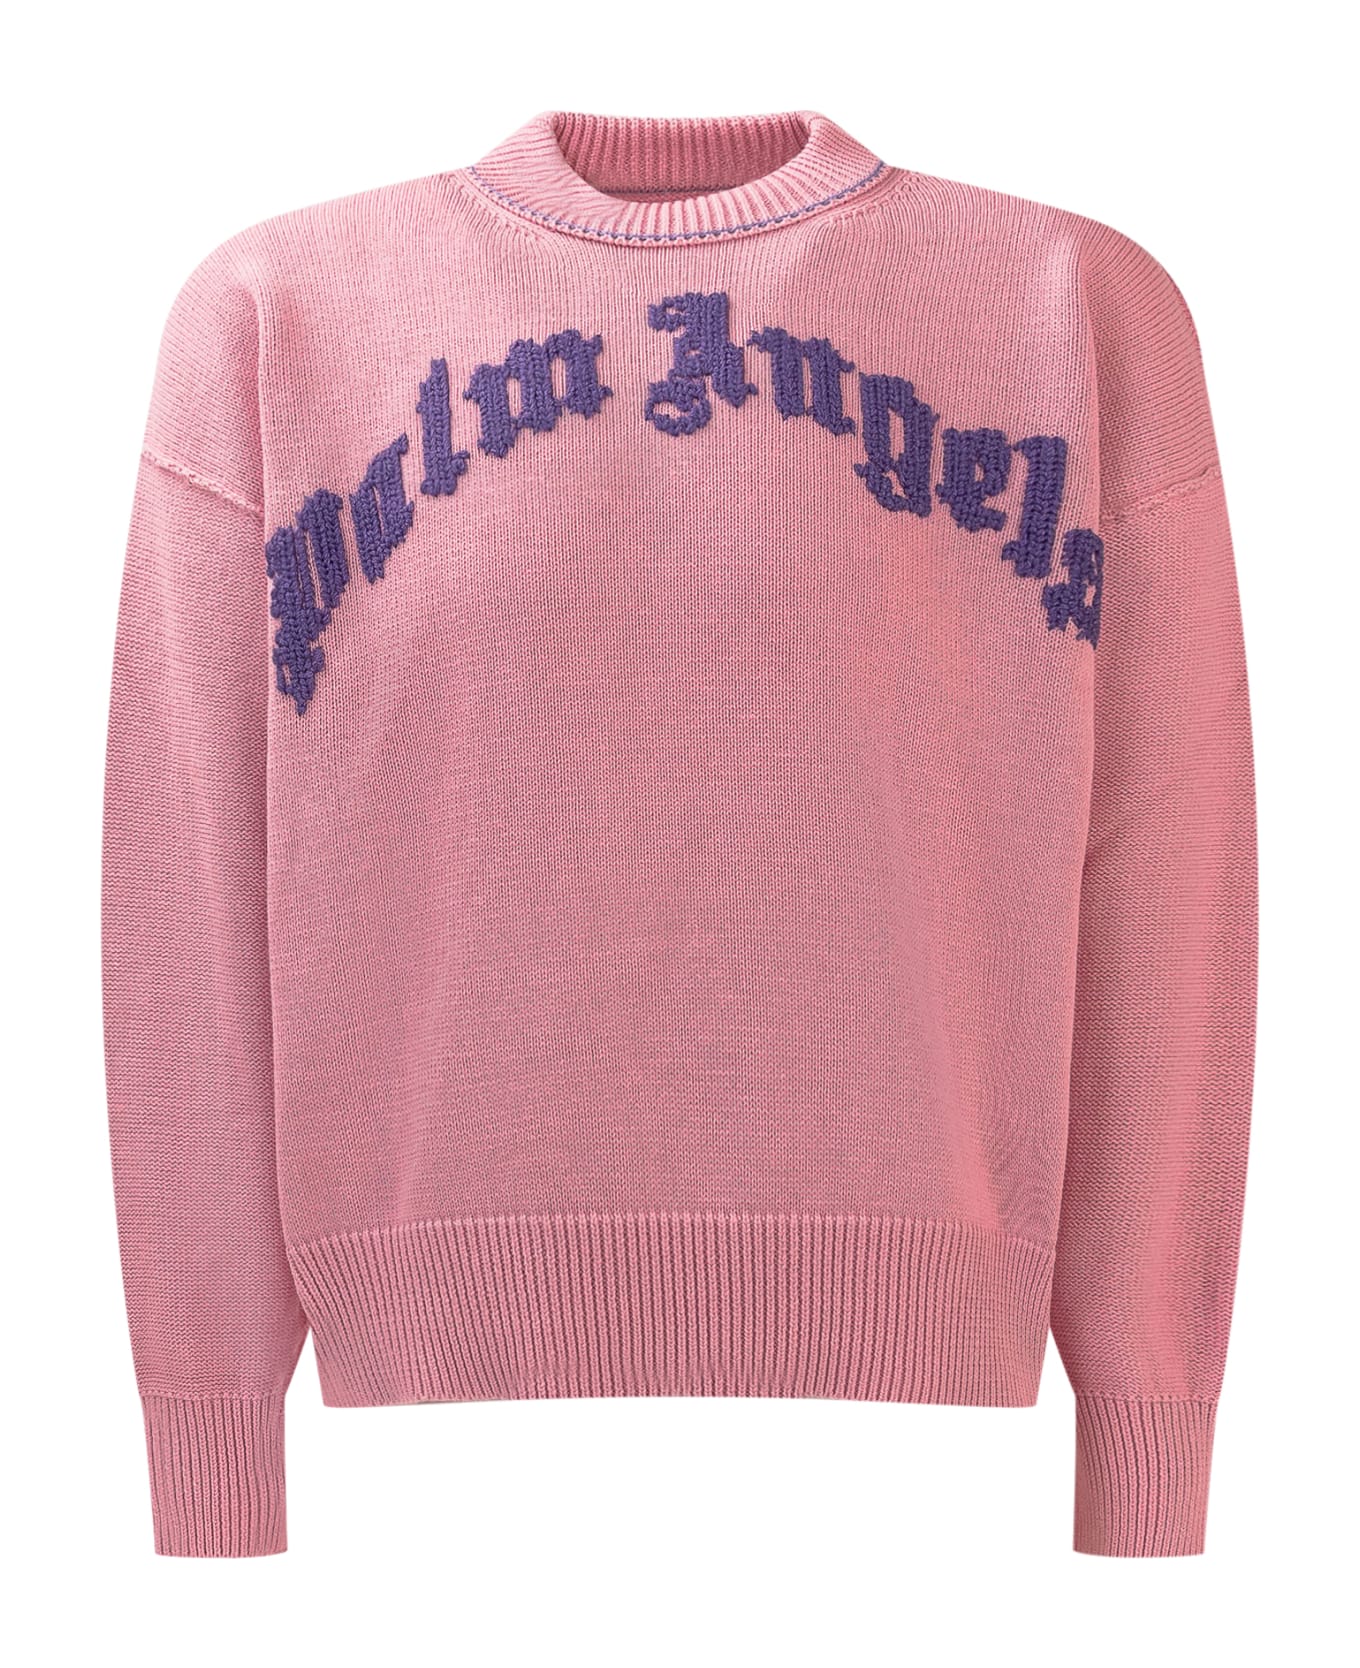 Palm Angels Logo Sweater - ROSE QUARTZ